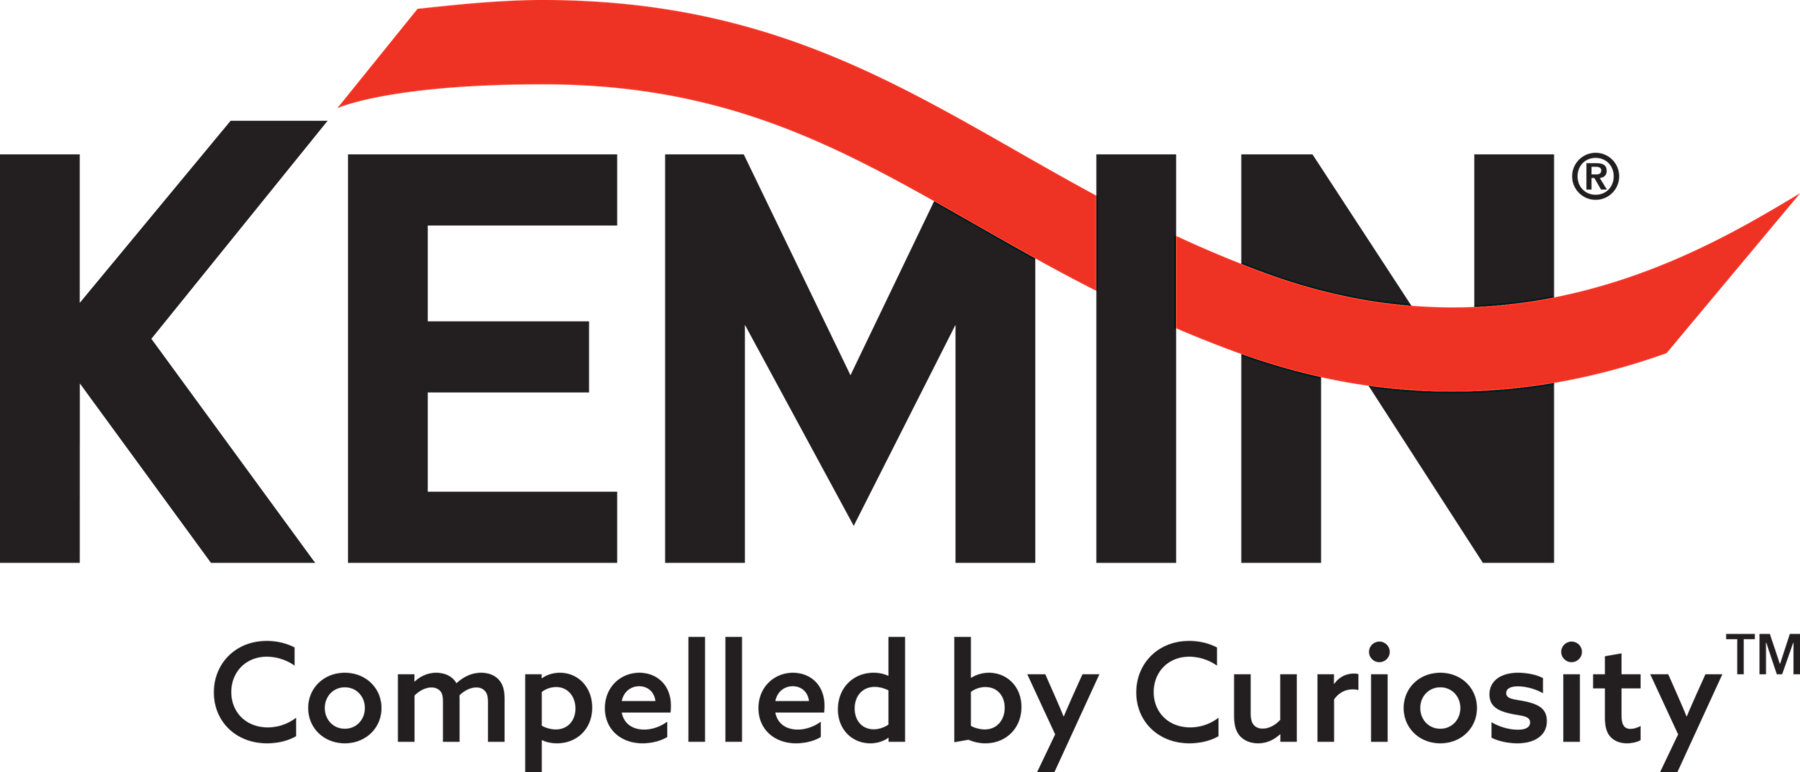 Kemin logo full color